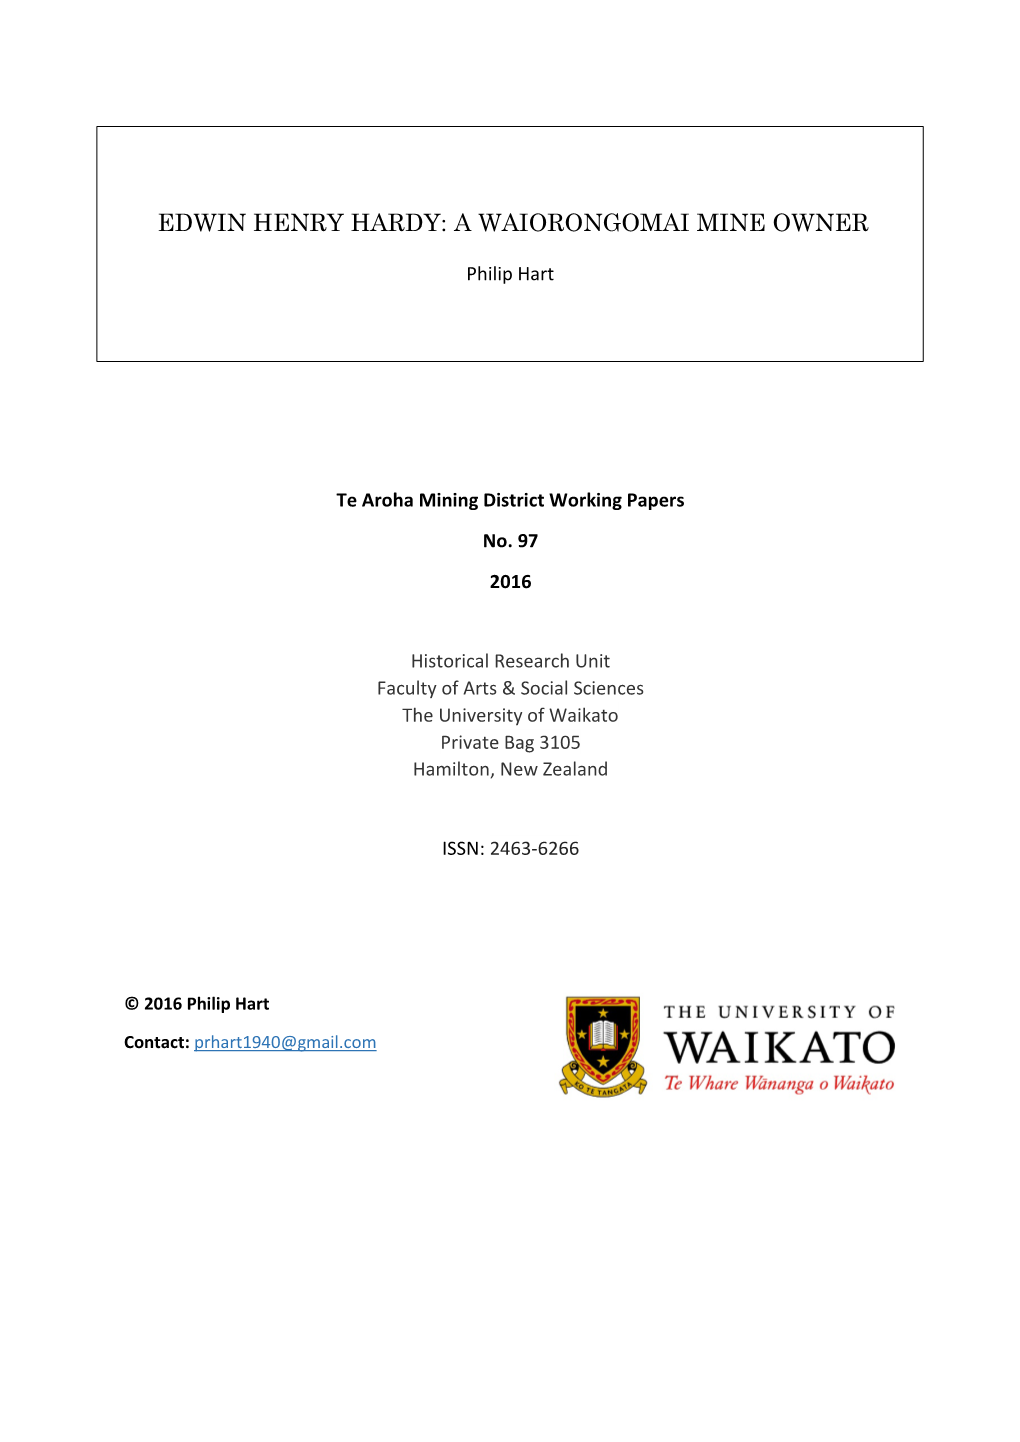 Edwin Henry Hardy: a Waiorongomai Mine Owner